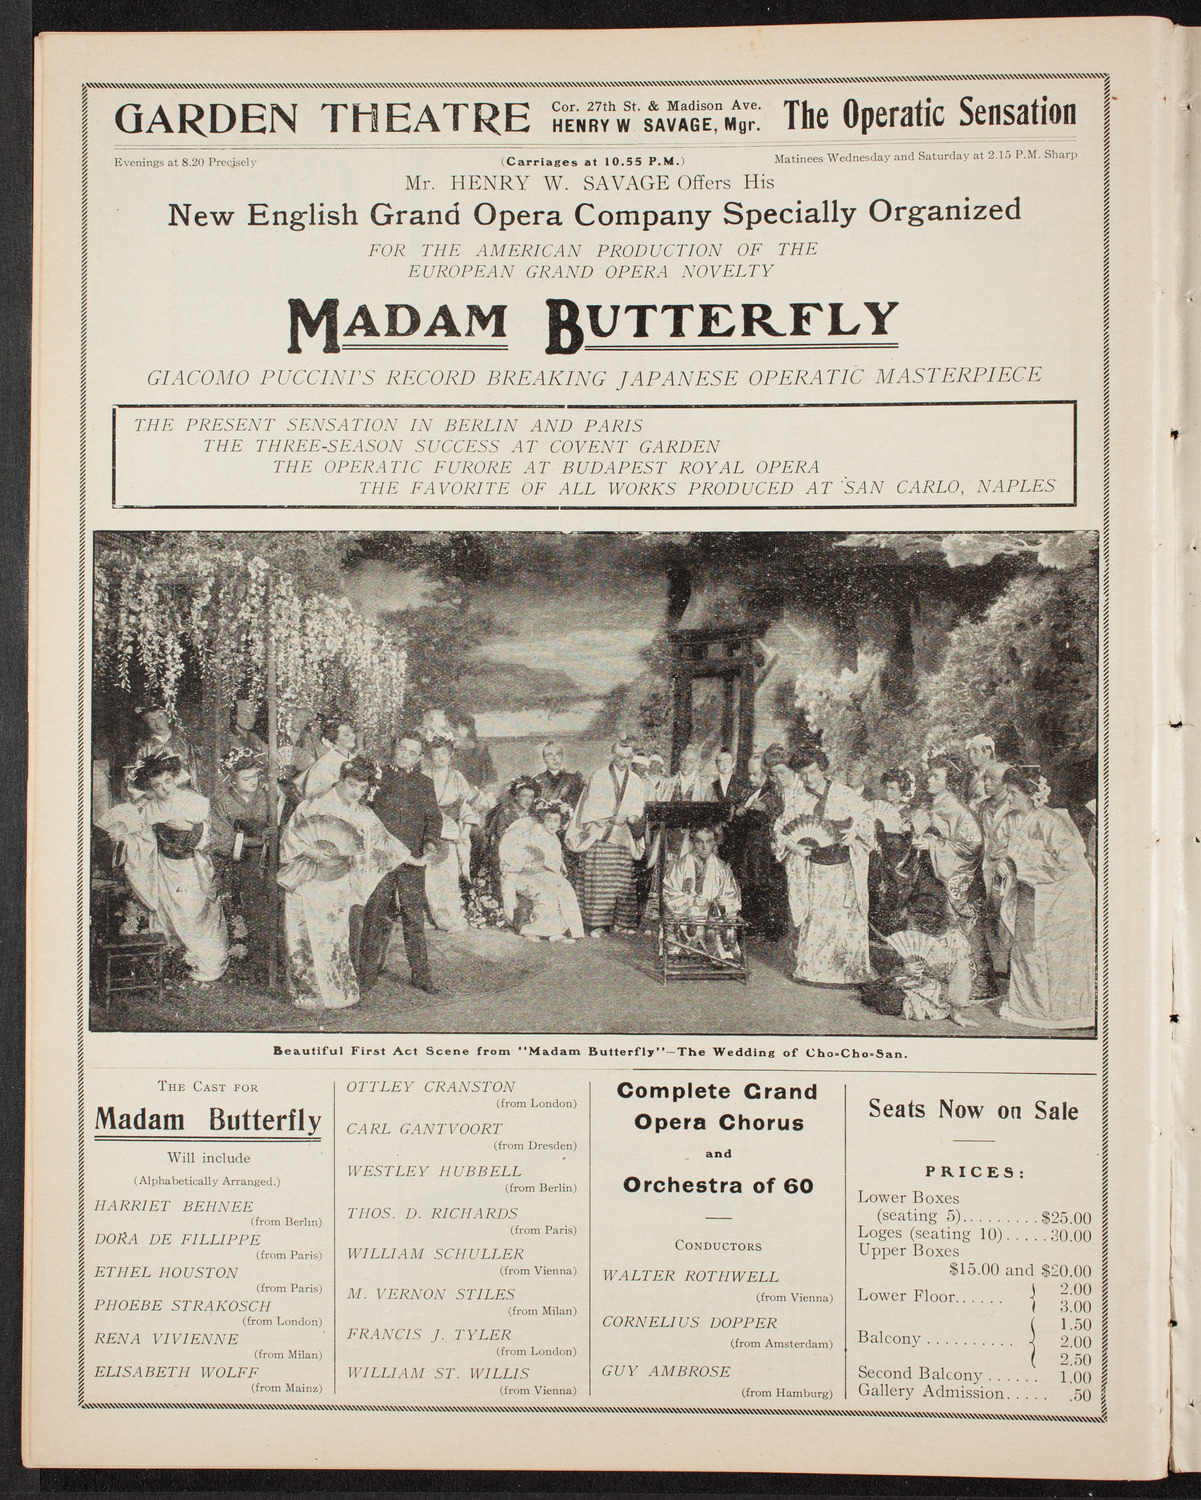 Rhondda Valley Male Concert Party, October 7, 1907, program page 10